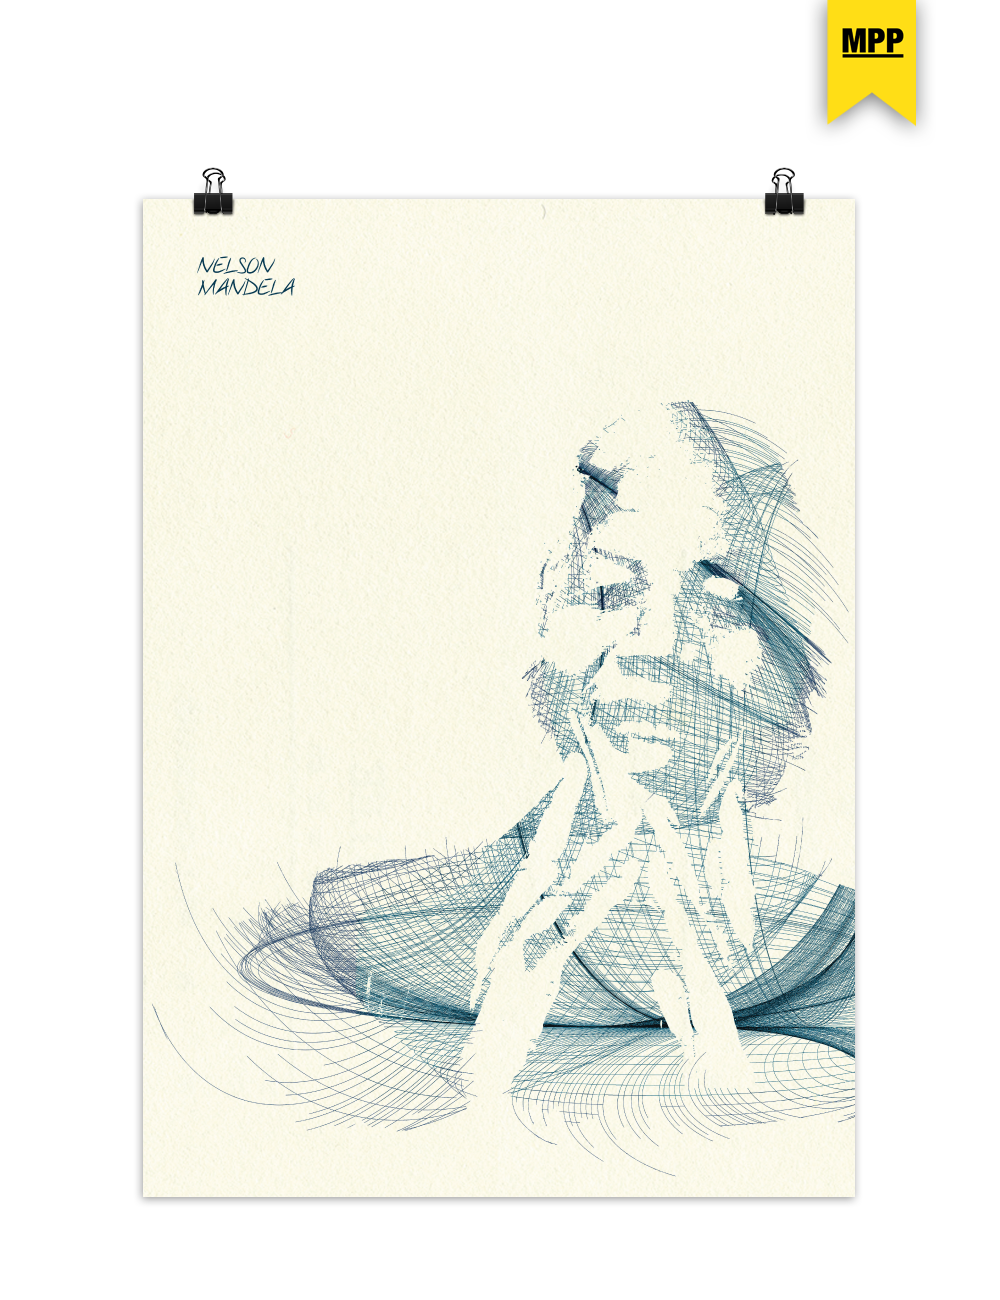 print poster Exhibition  award reggae contest design abstract Scrible lines camvas portrait